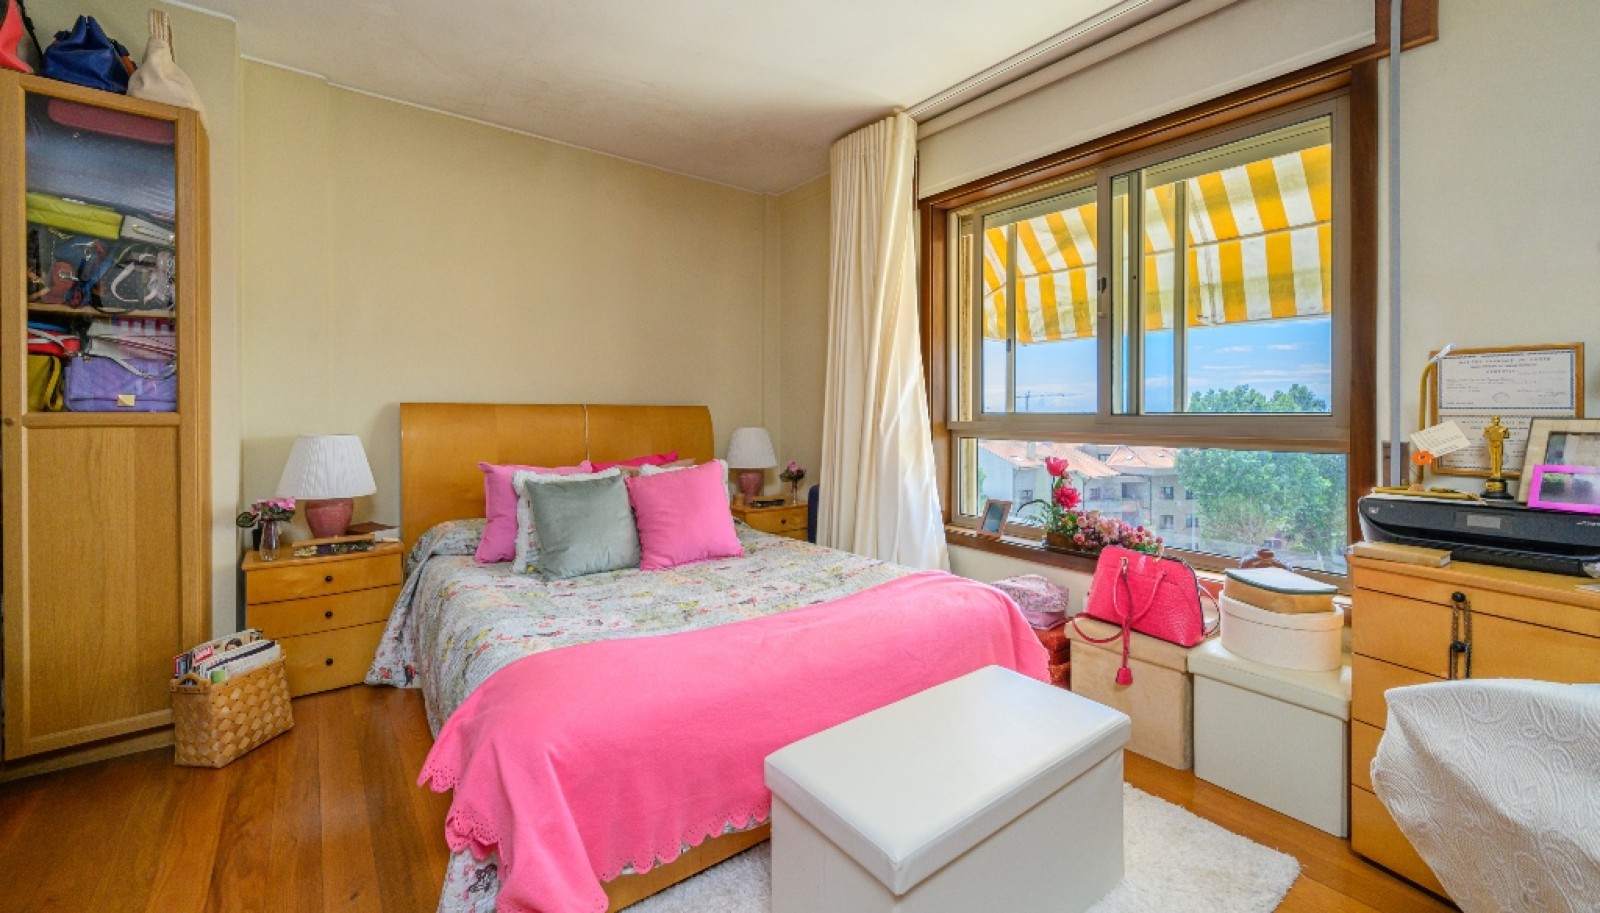 Piso dúplex de 4 dormitorios con vistas al mar, en venta, Leça da Palmeira, Portugal_266022